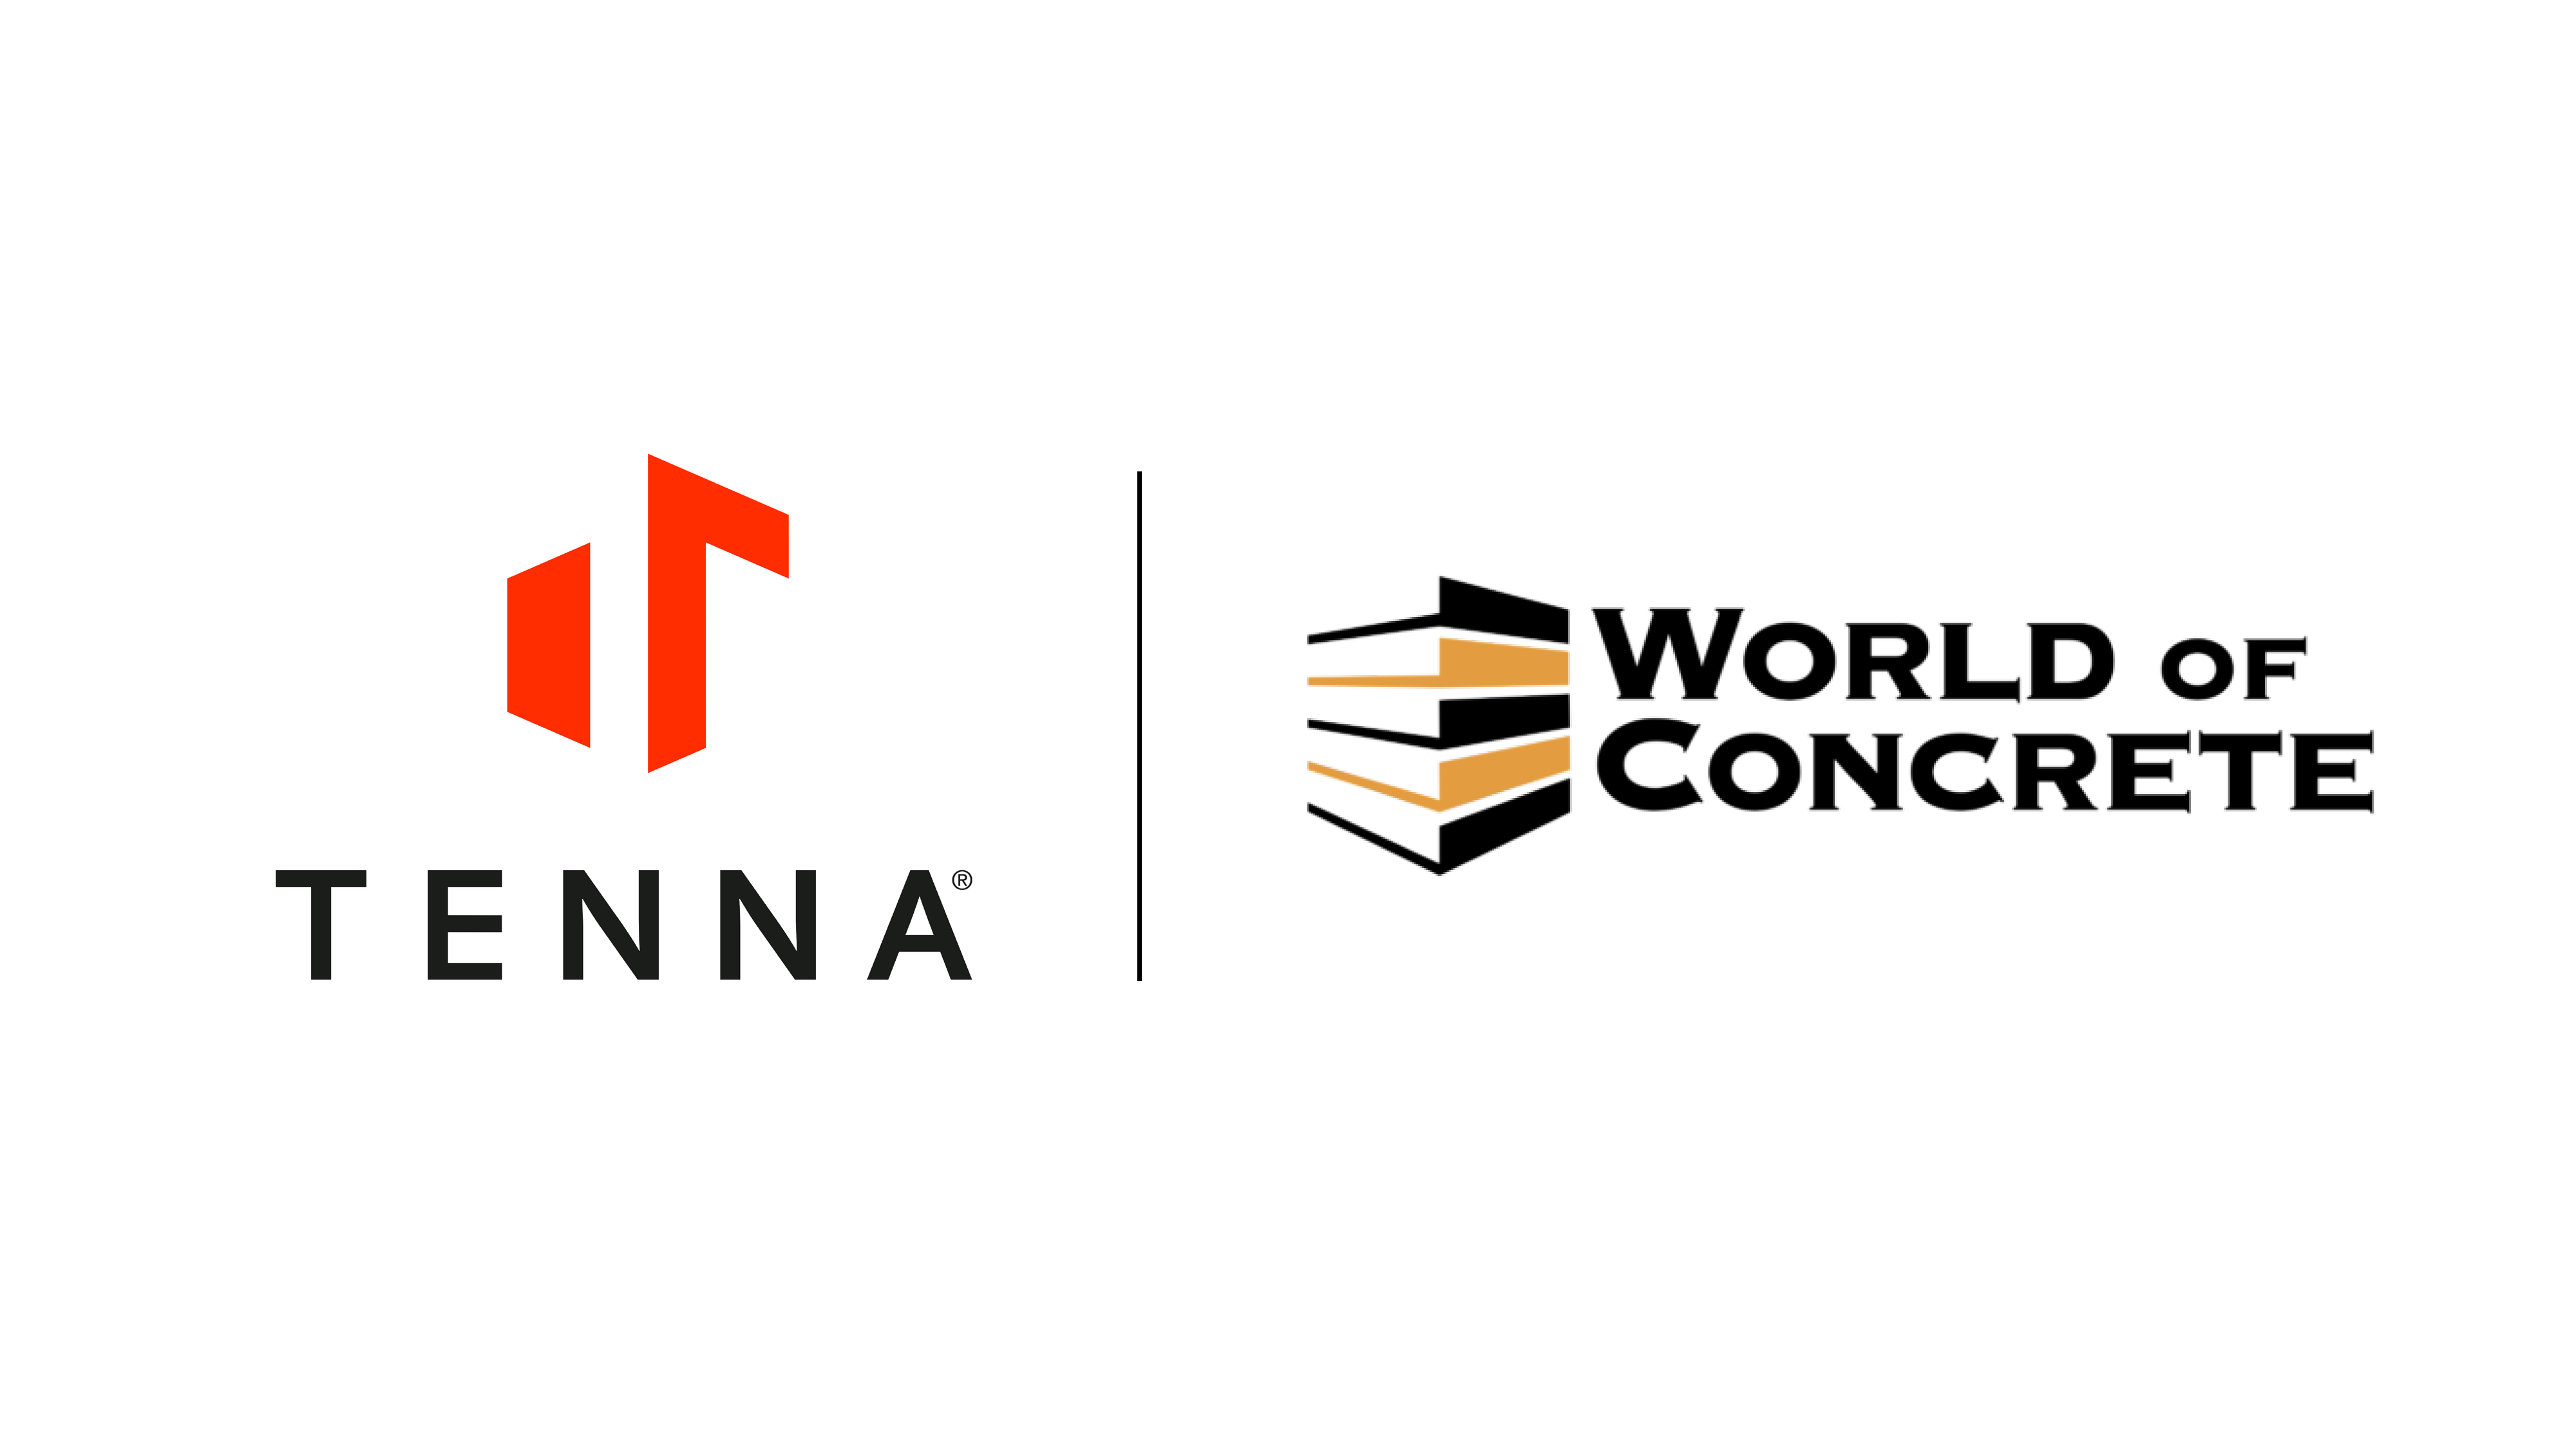 Tenna and World of Concrete Logos